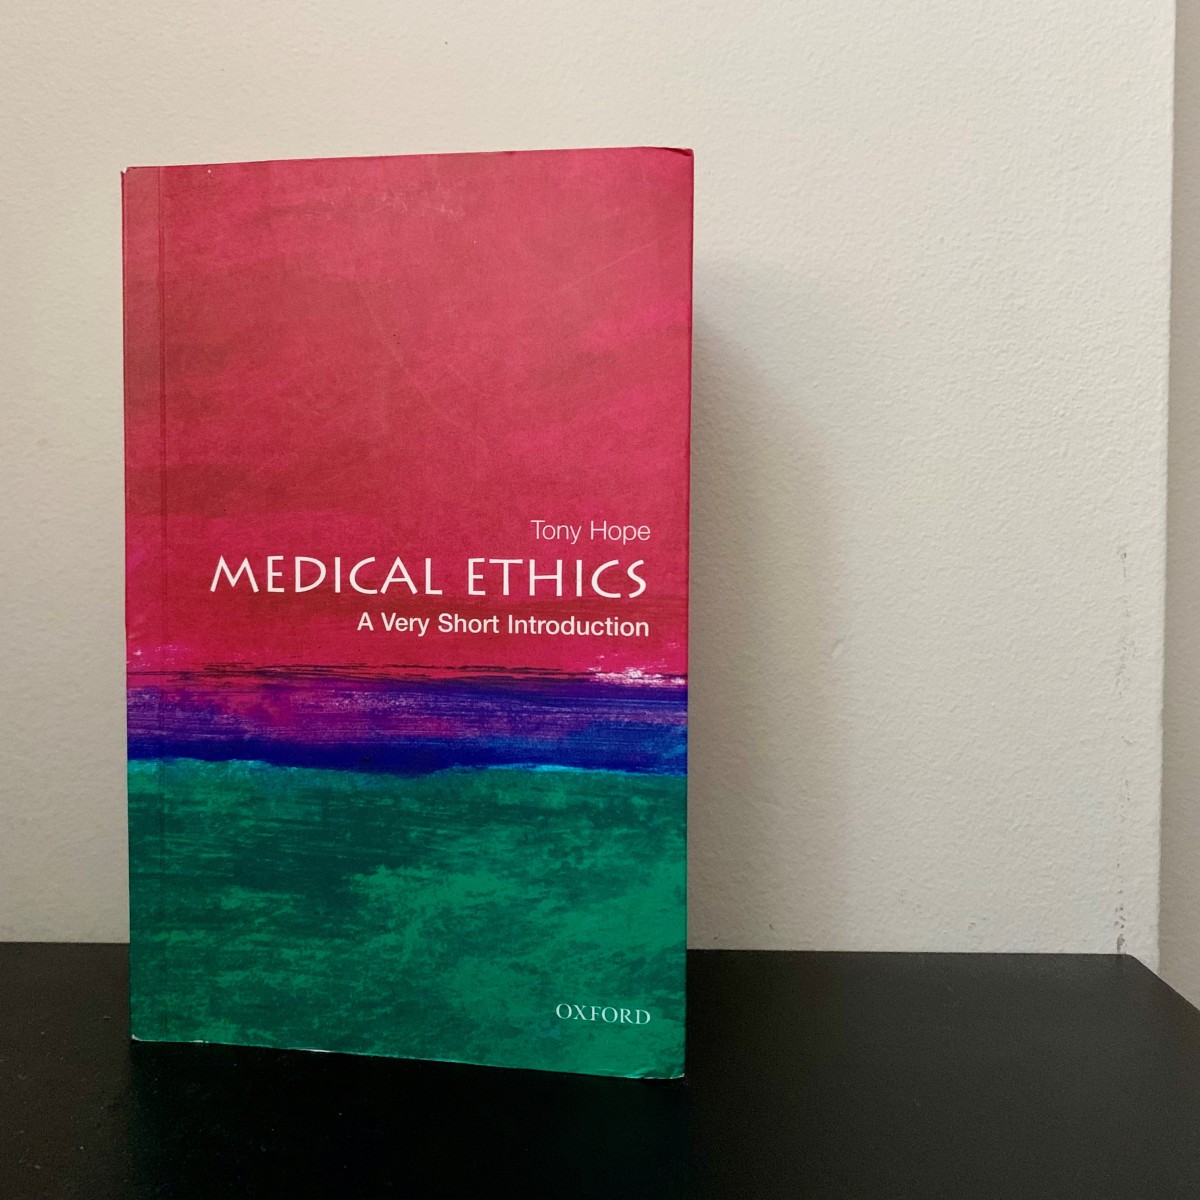 ‘Medical Ethics’ by Tony Hope